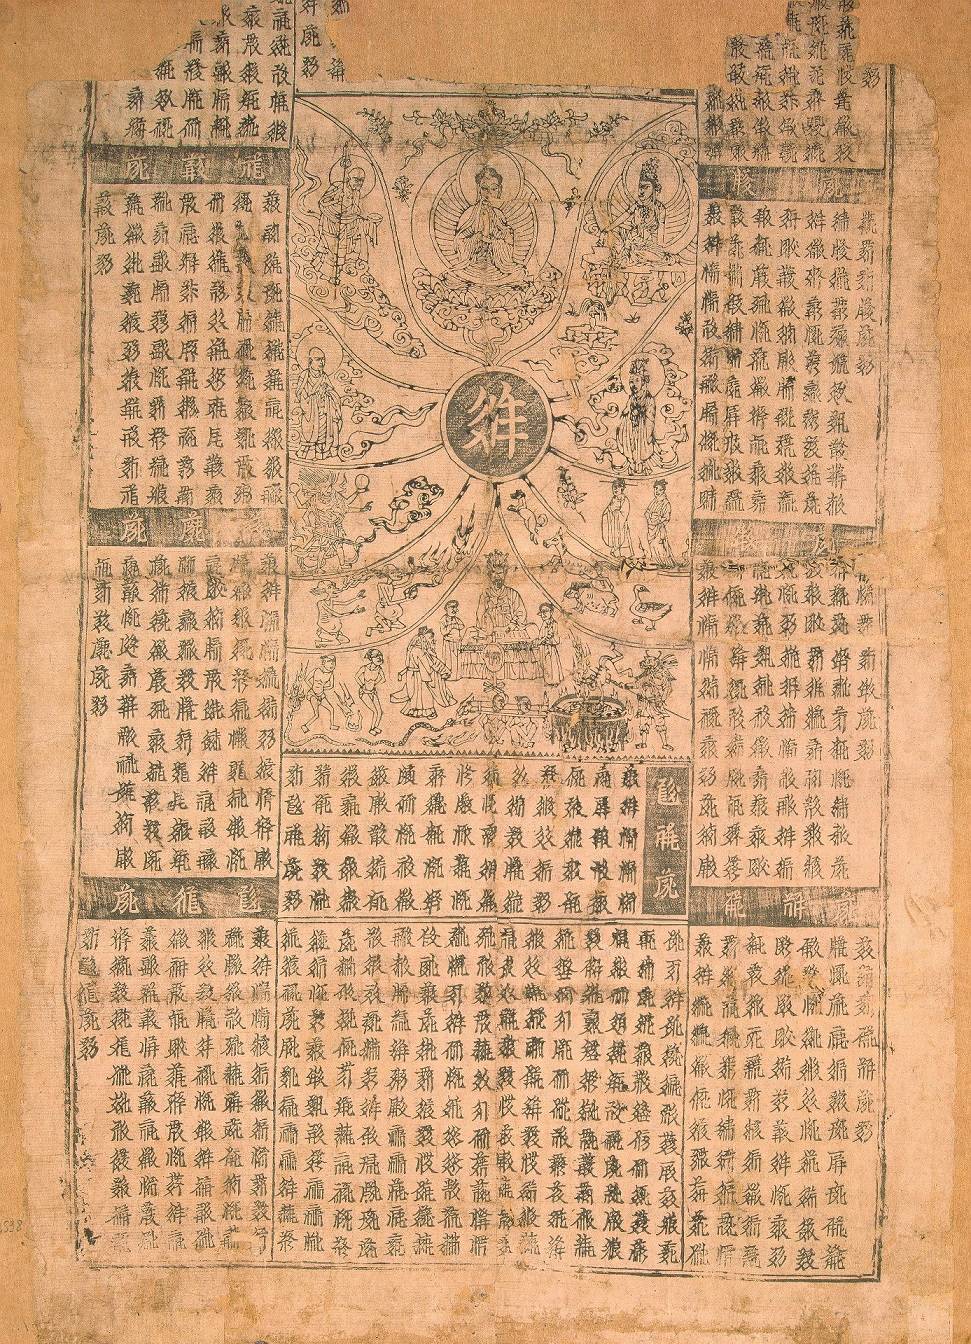 Buddha, Bodhisattvas Kshitigarbha and Avalokiteshvara.